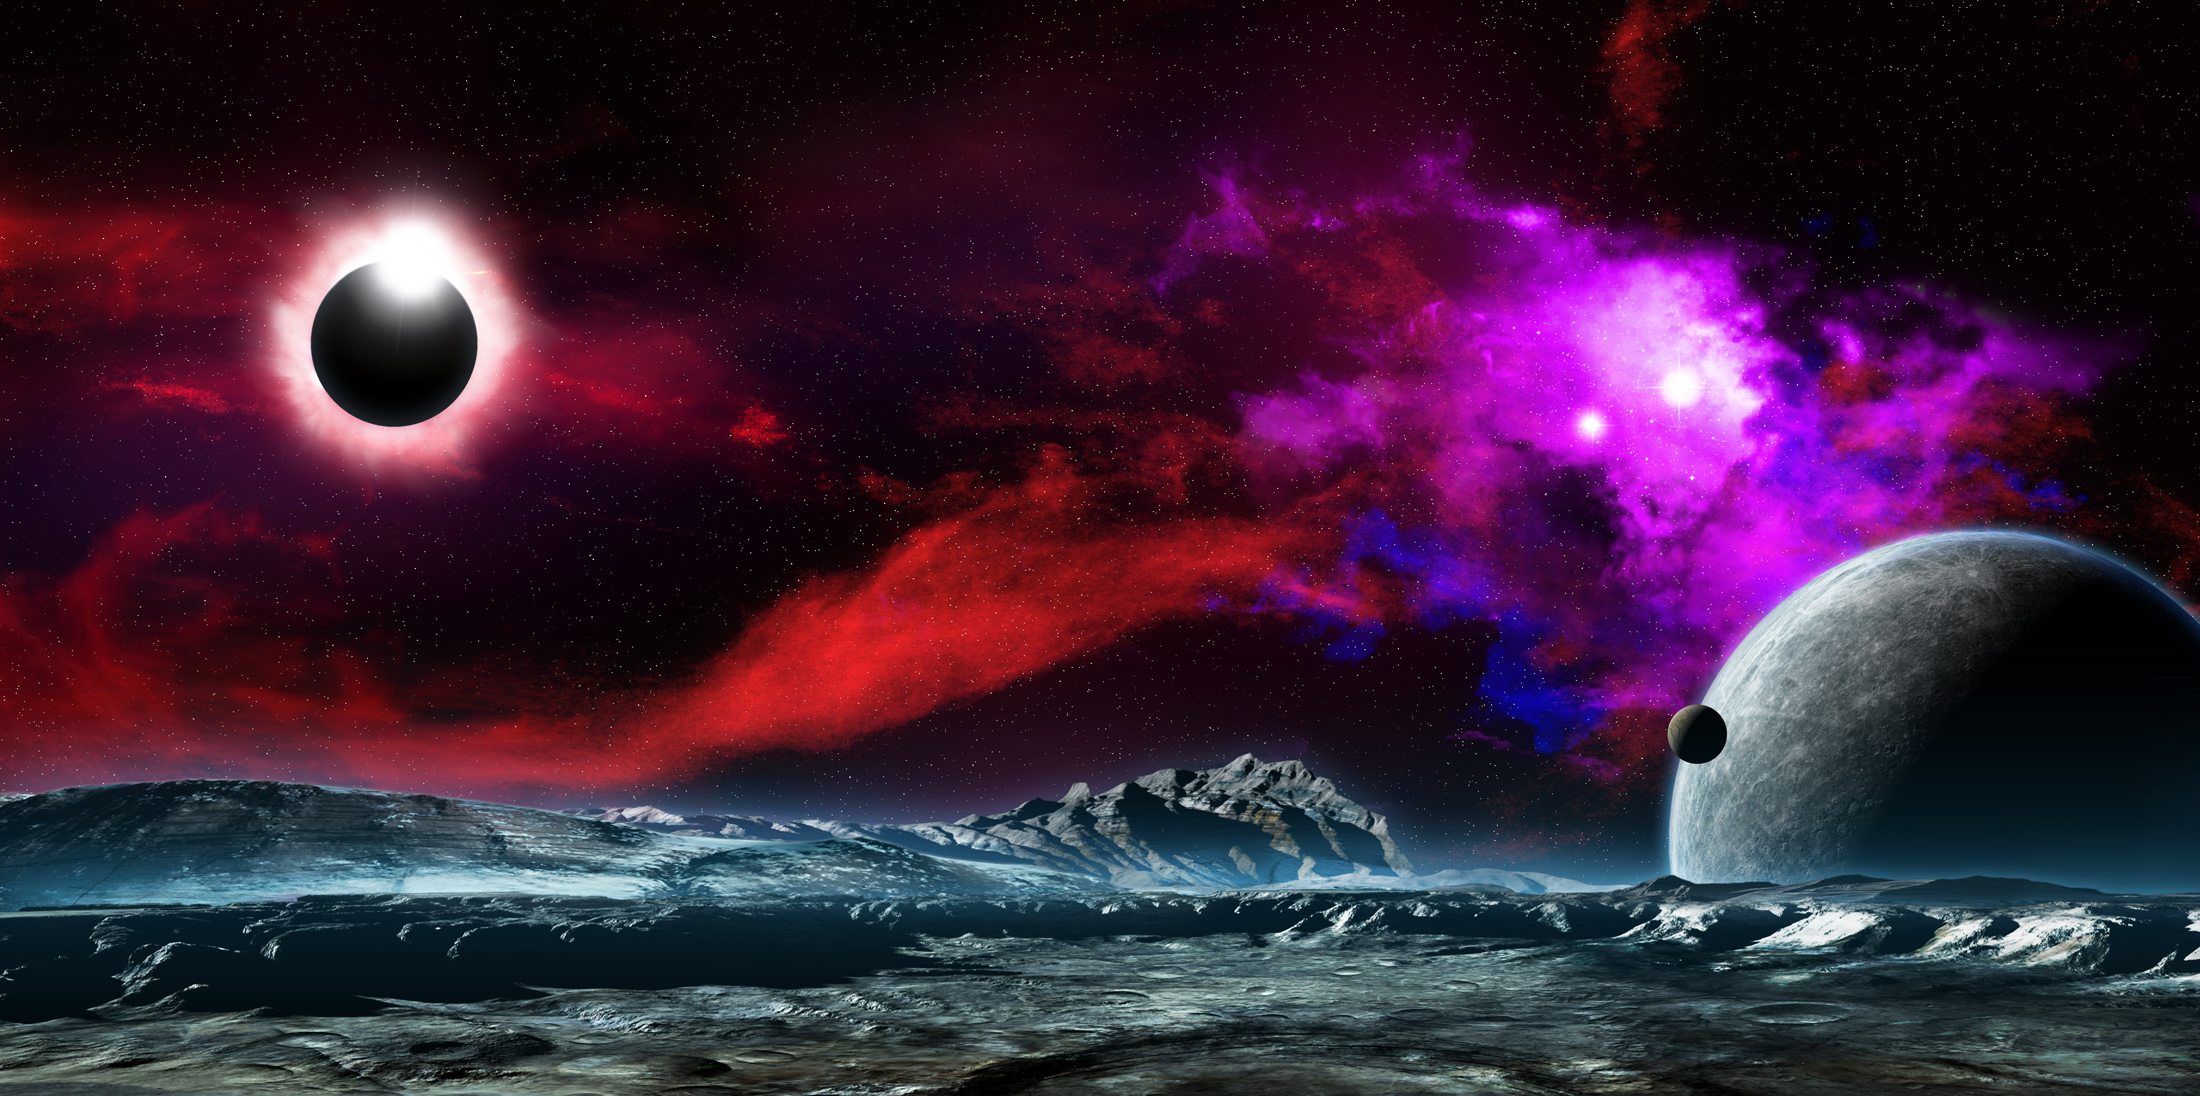 Nebula Eclipse by Bill Lile